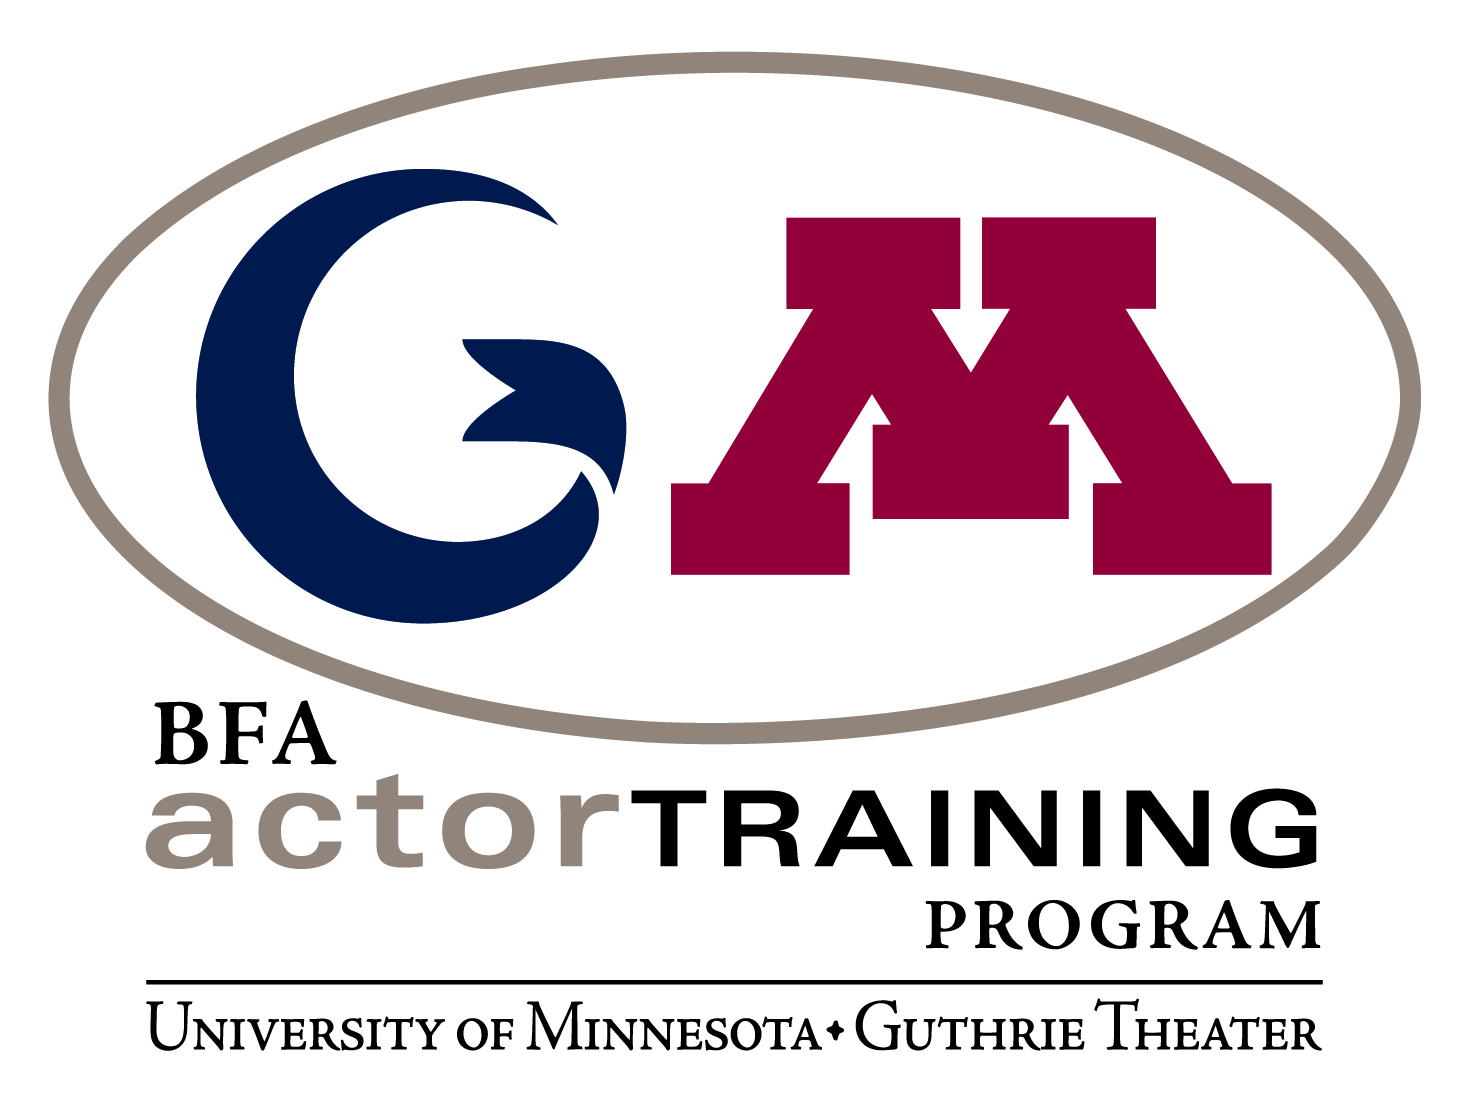 Guthrie Theater University of Minnesota BFA Actor Training Program logo